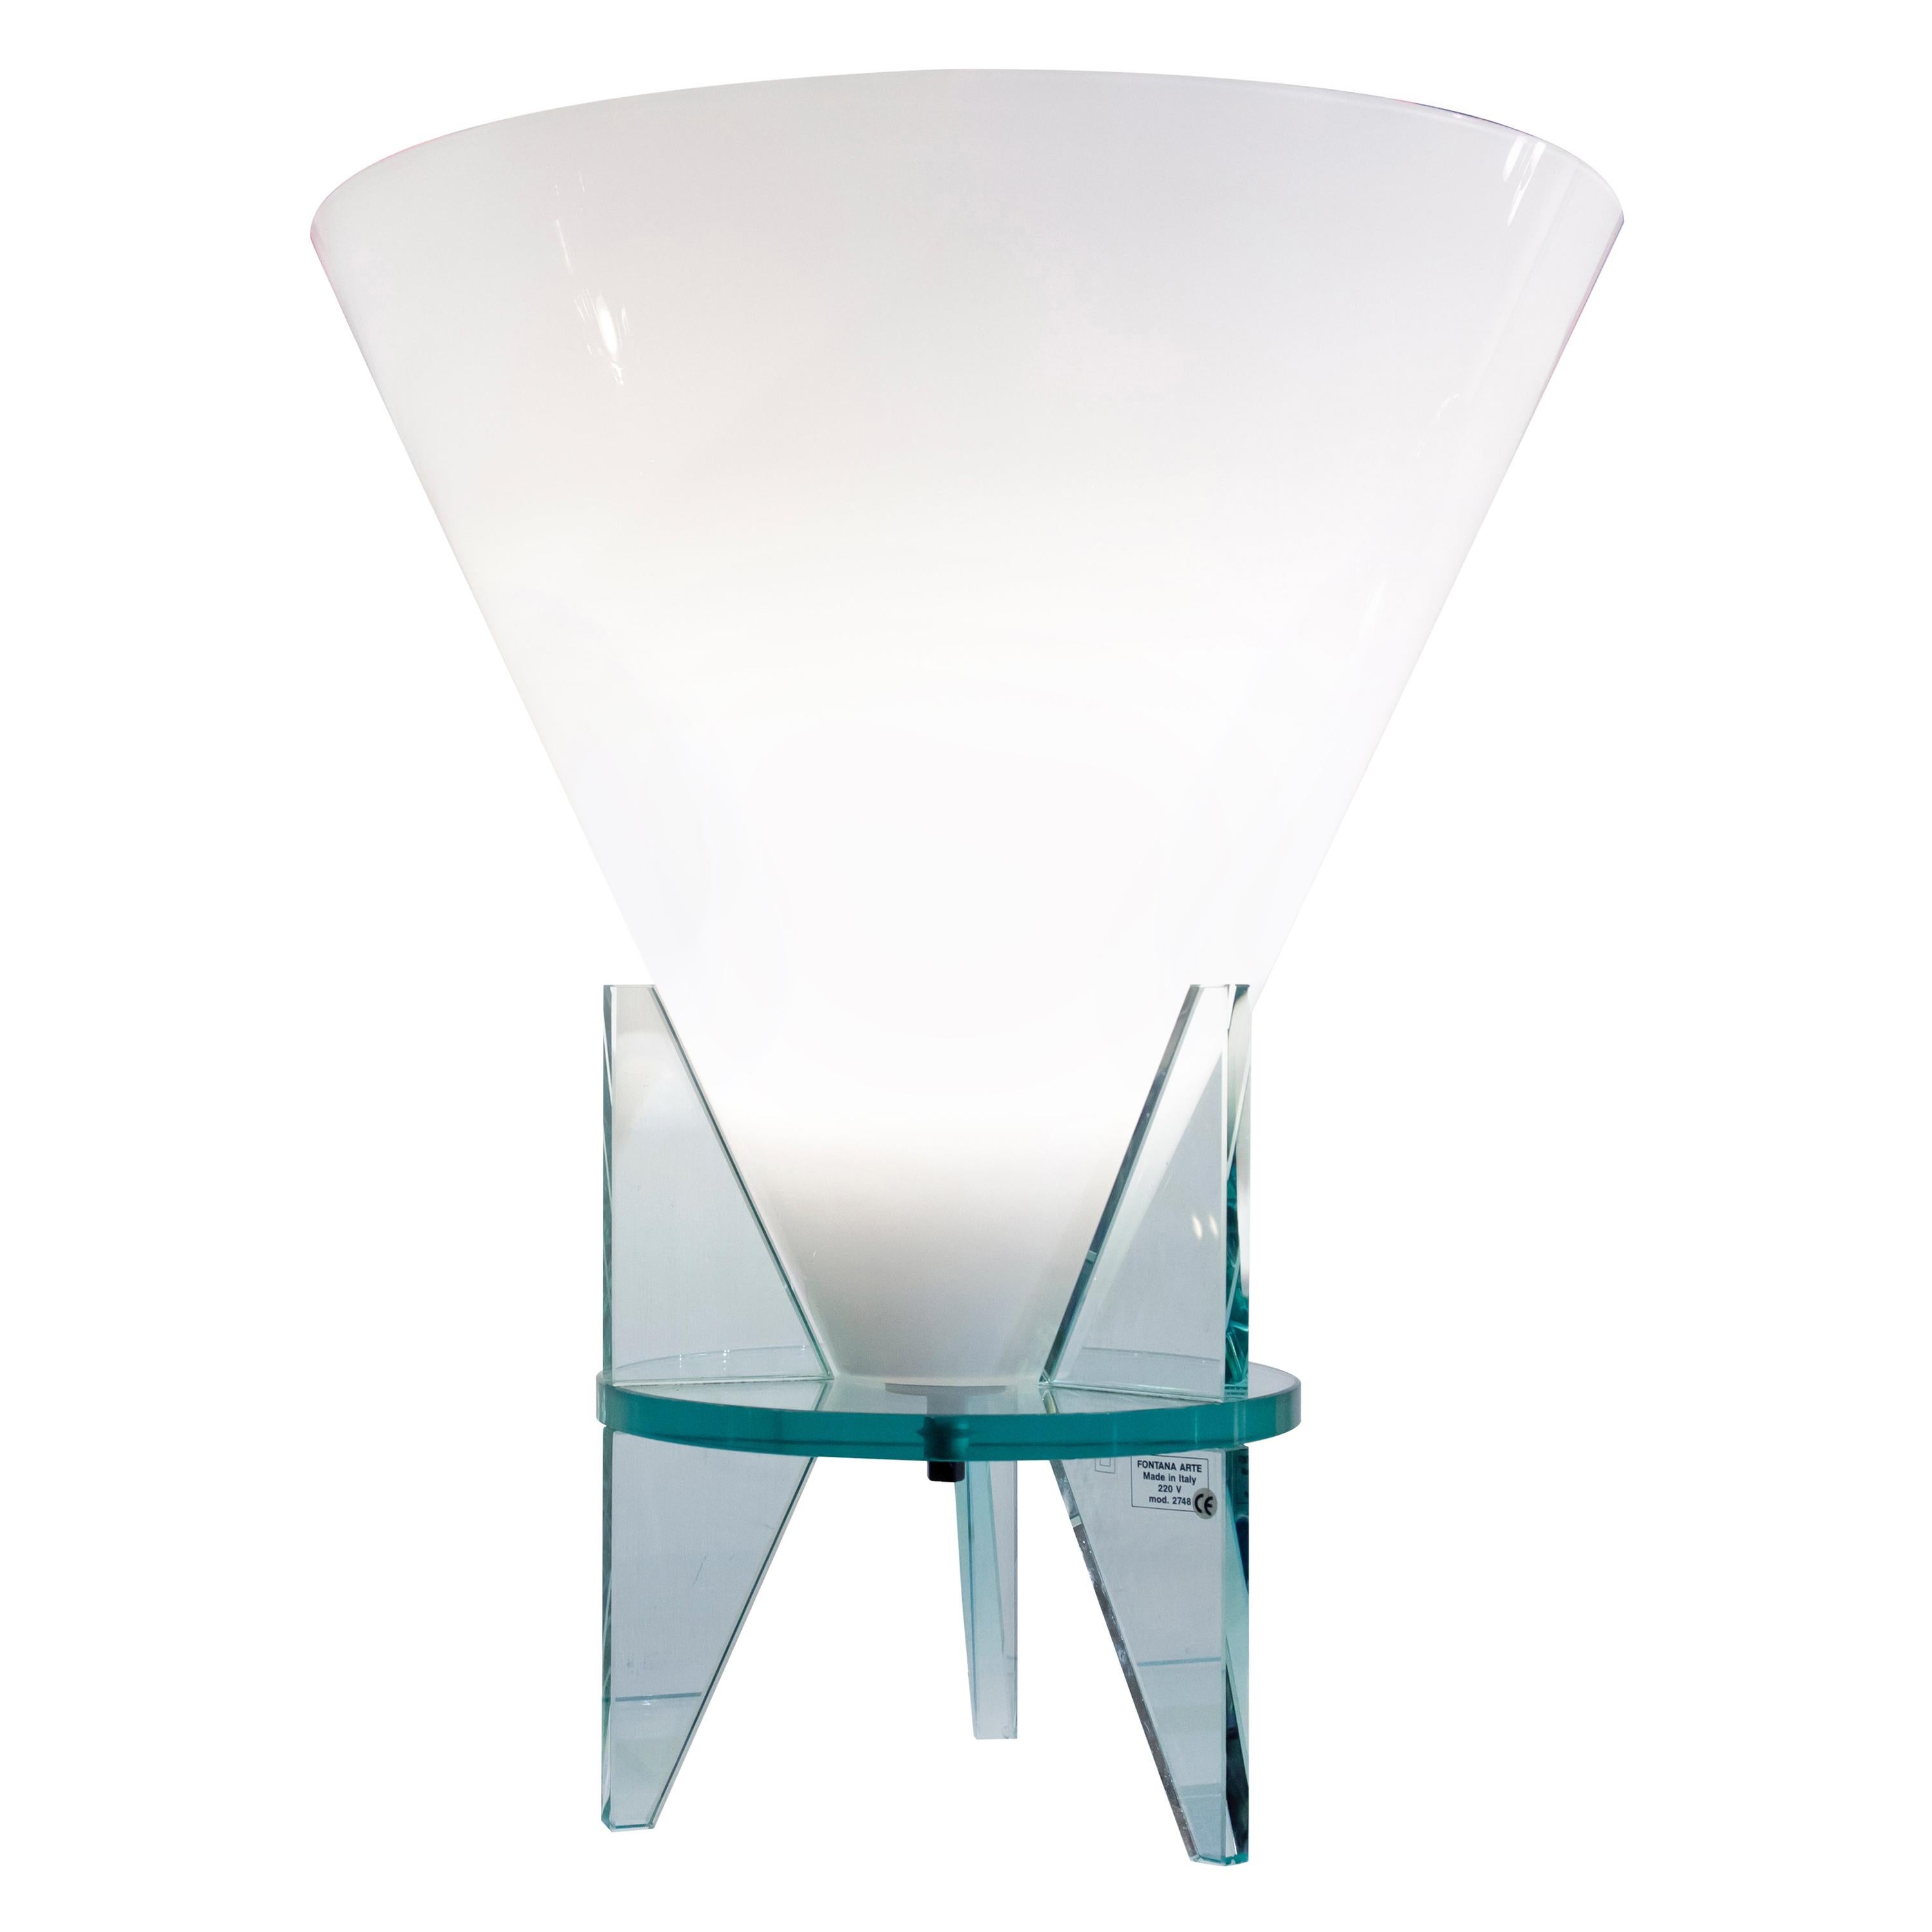 Vintage "Otero" Table Lamp Model 2748 by R. Dordoni for Fontana Arte, 1984